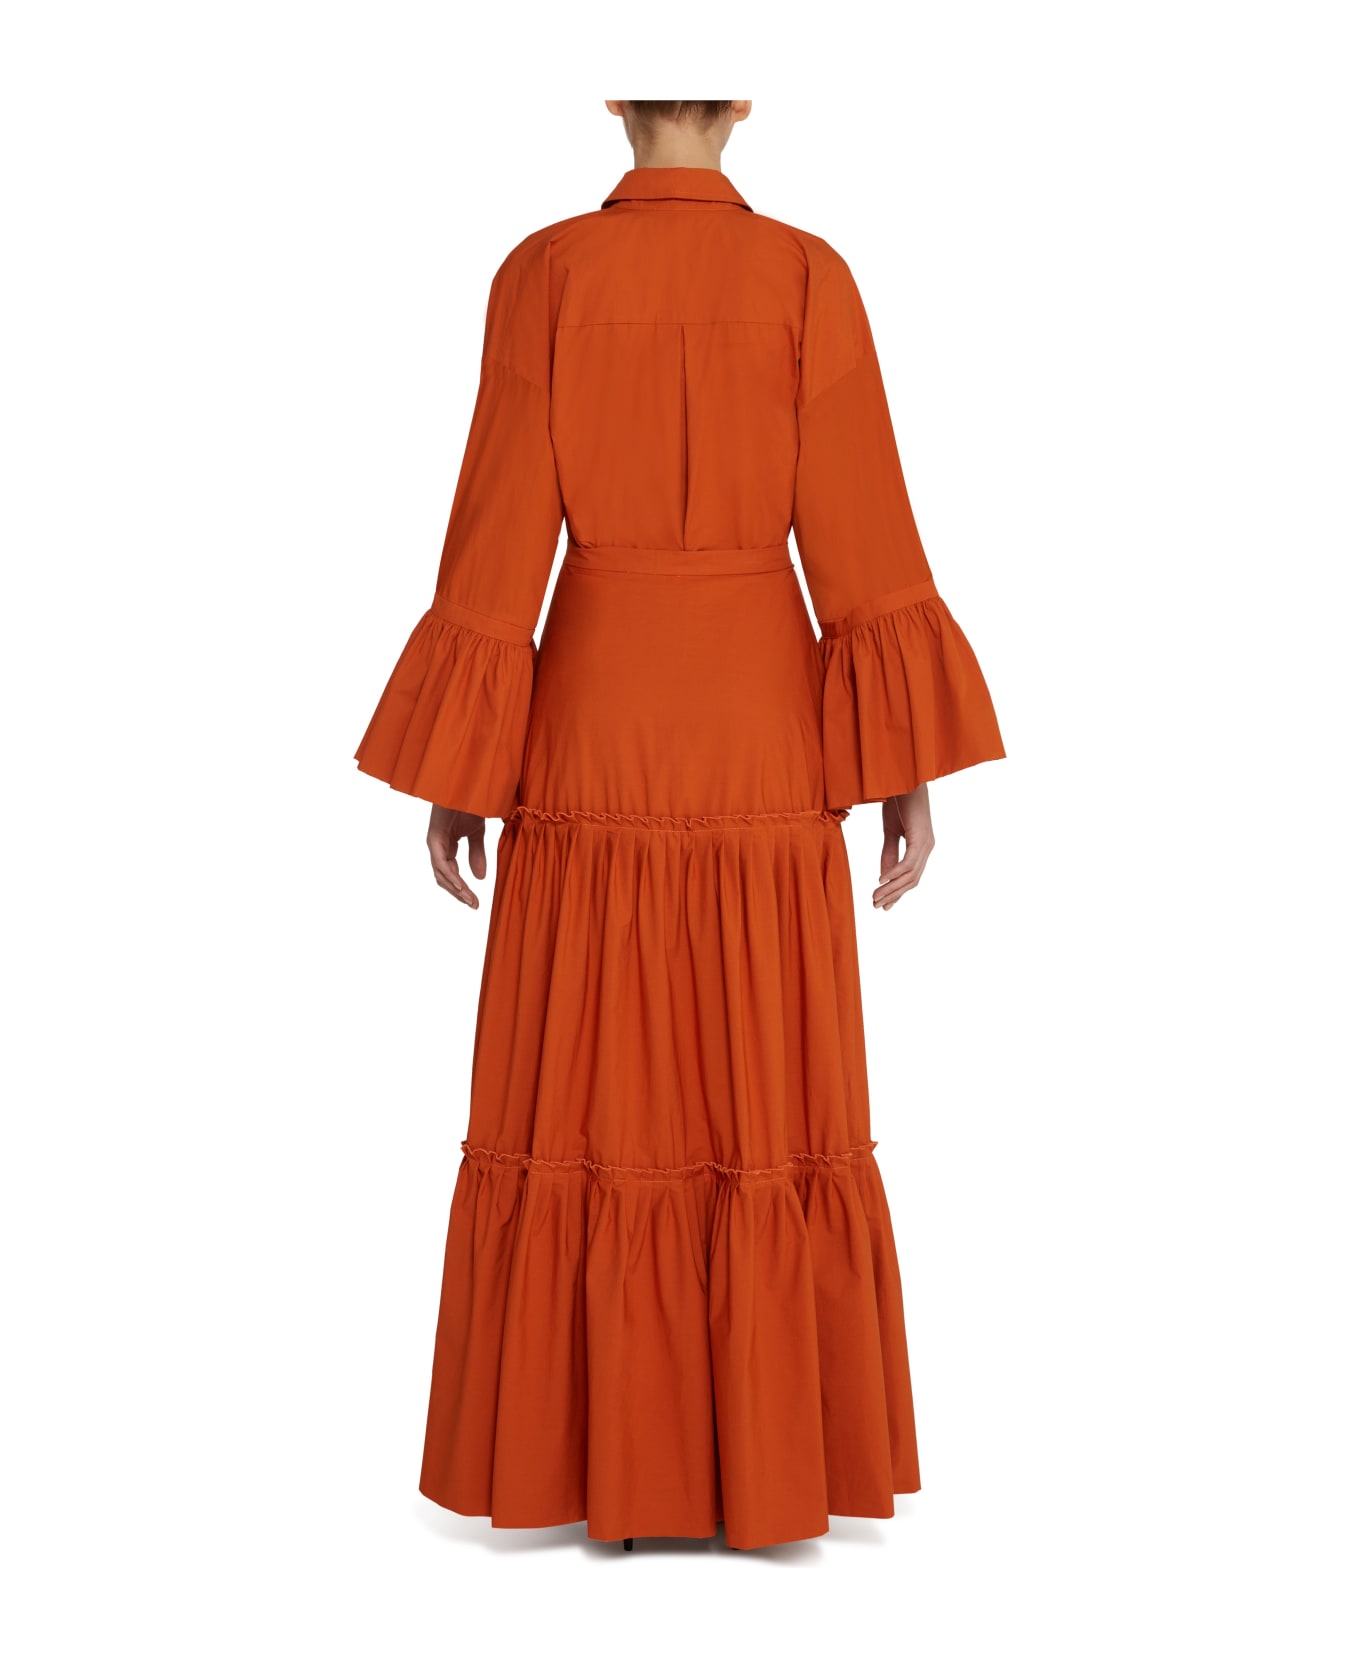 Amotea Charlotte Long Skirt In Orange Poplin - Orange